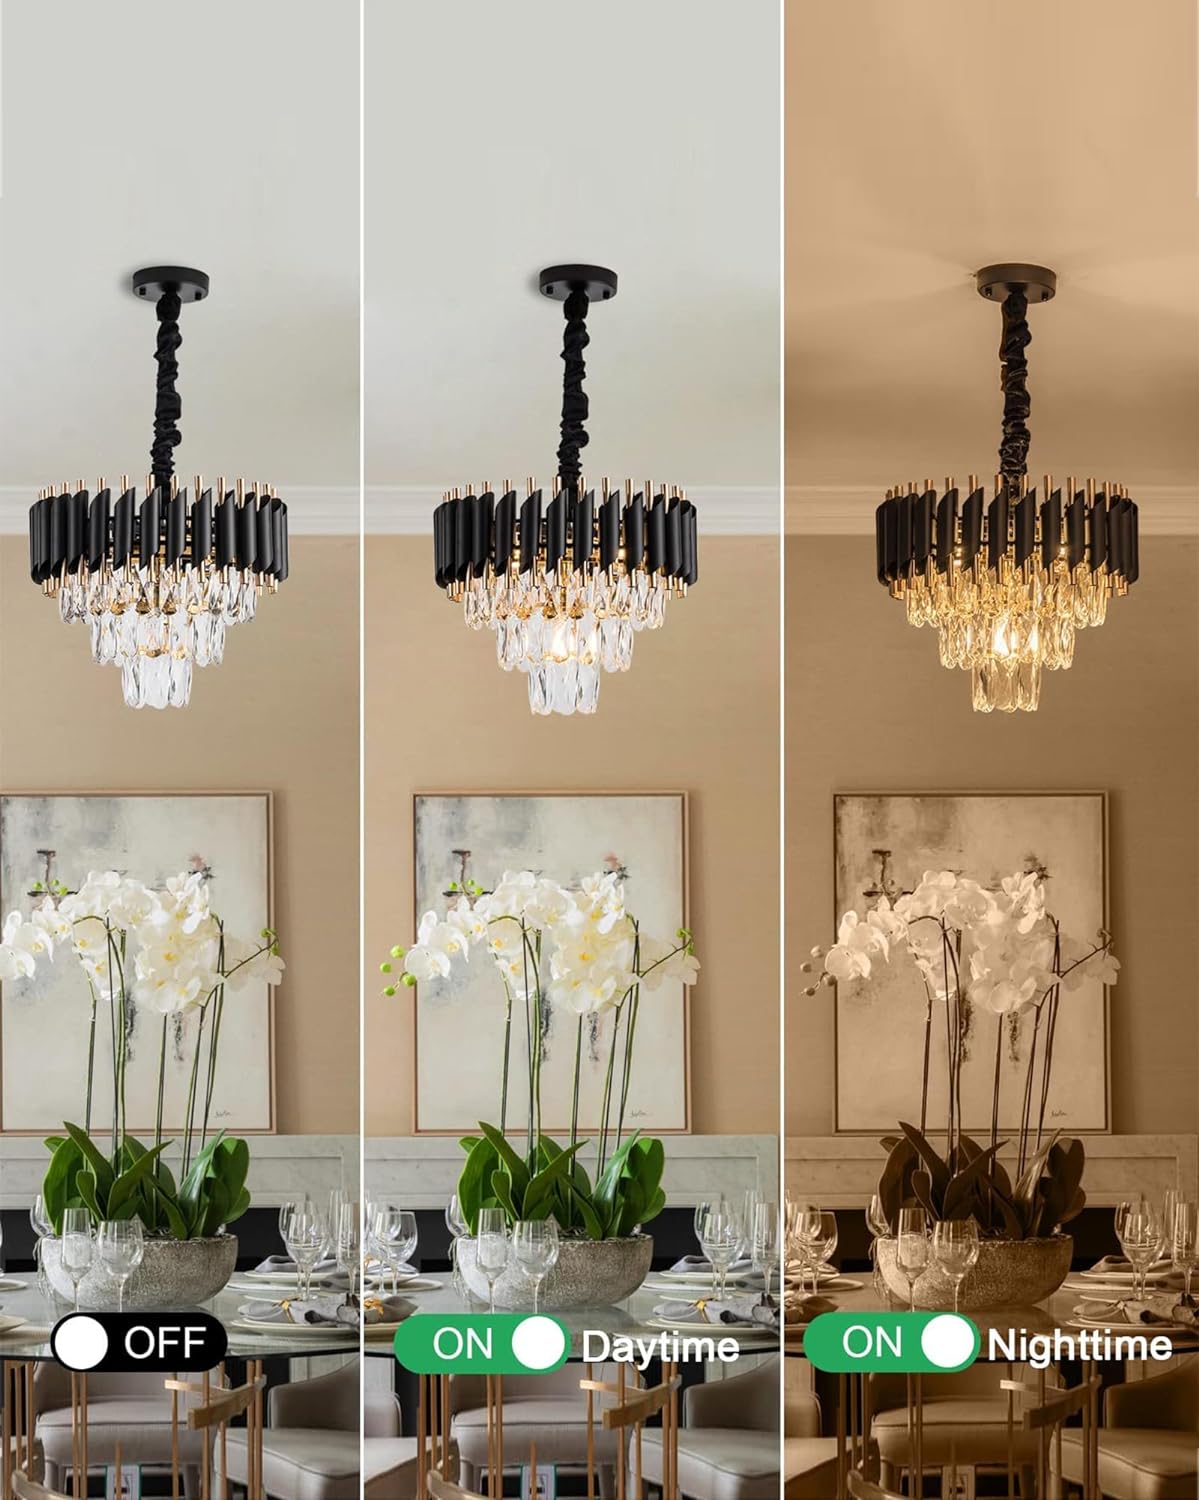 15" 5-Light Modern Crystal Chandelier Light Fixtures 3-Tier Gold Luxury Chandeliers for Dining Room Round Hanging Pendant Lighting for Living Room Kitchen Entryway, Bedroom Hallway 400mm